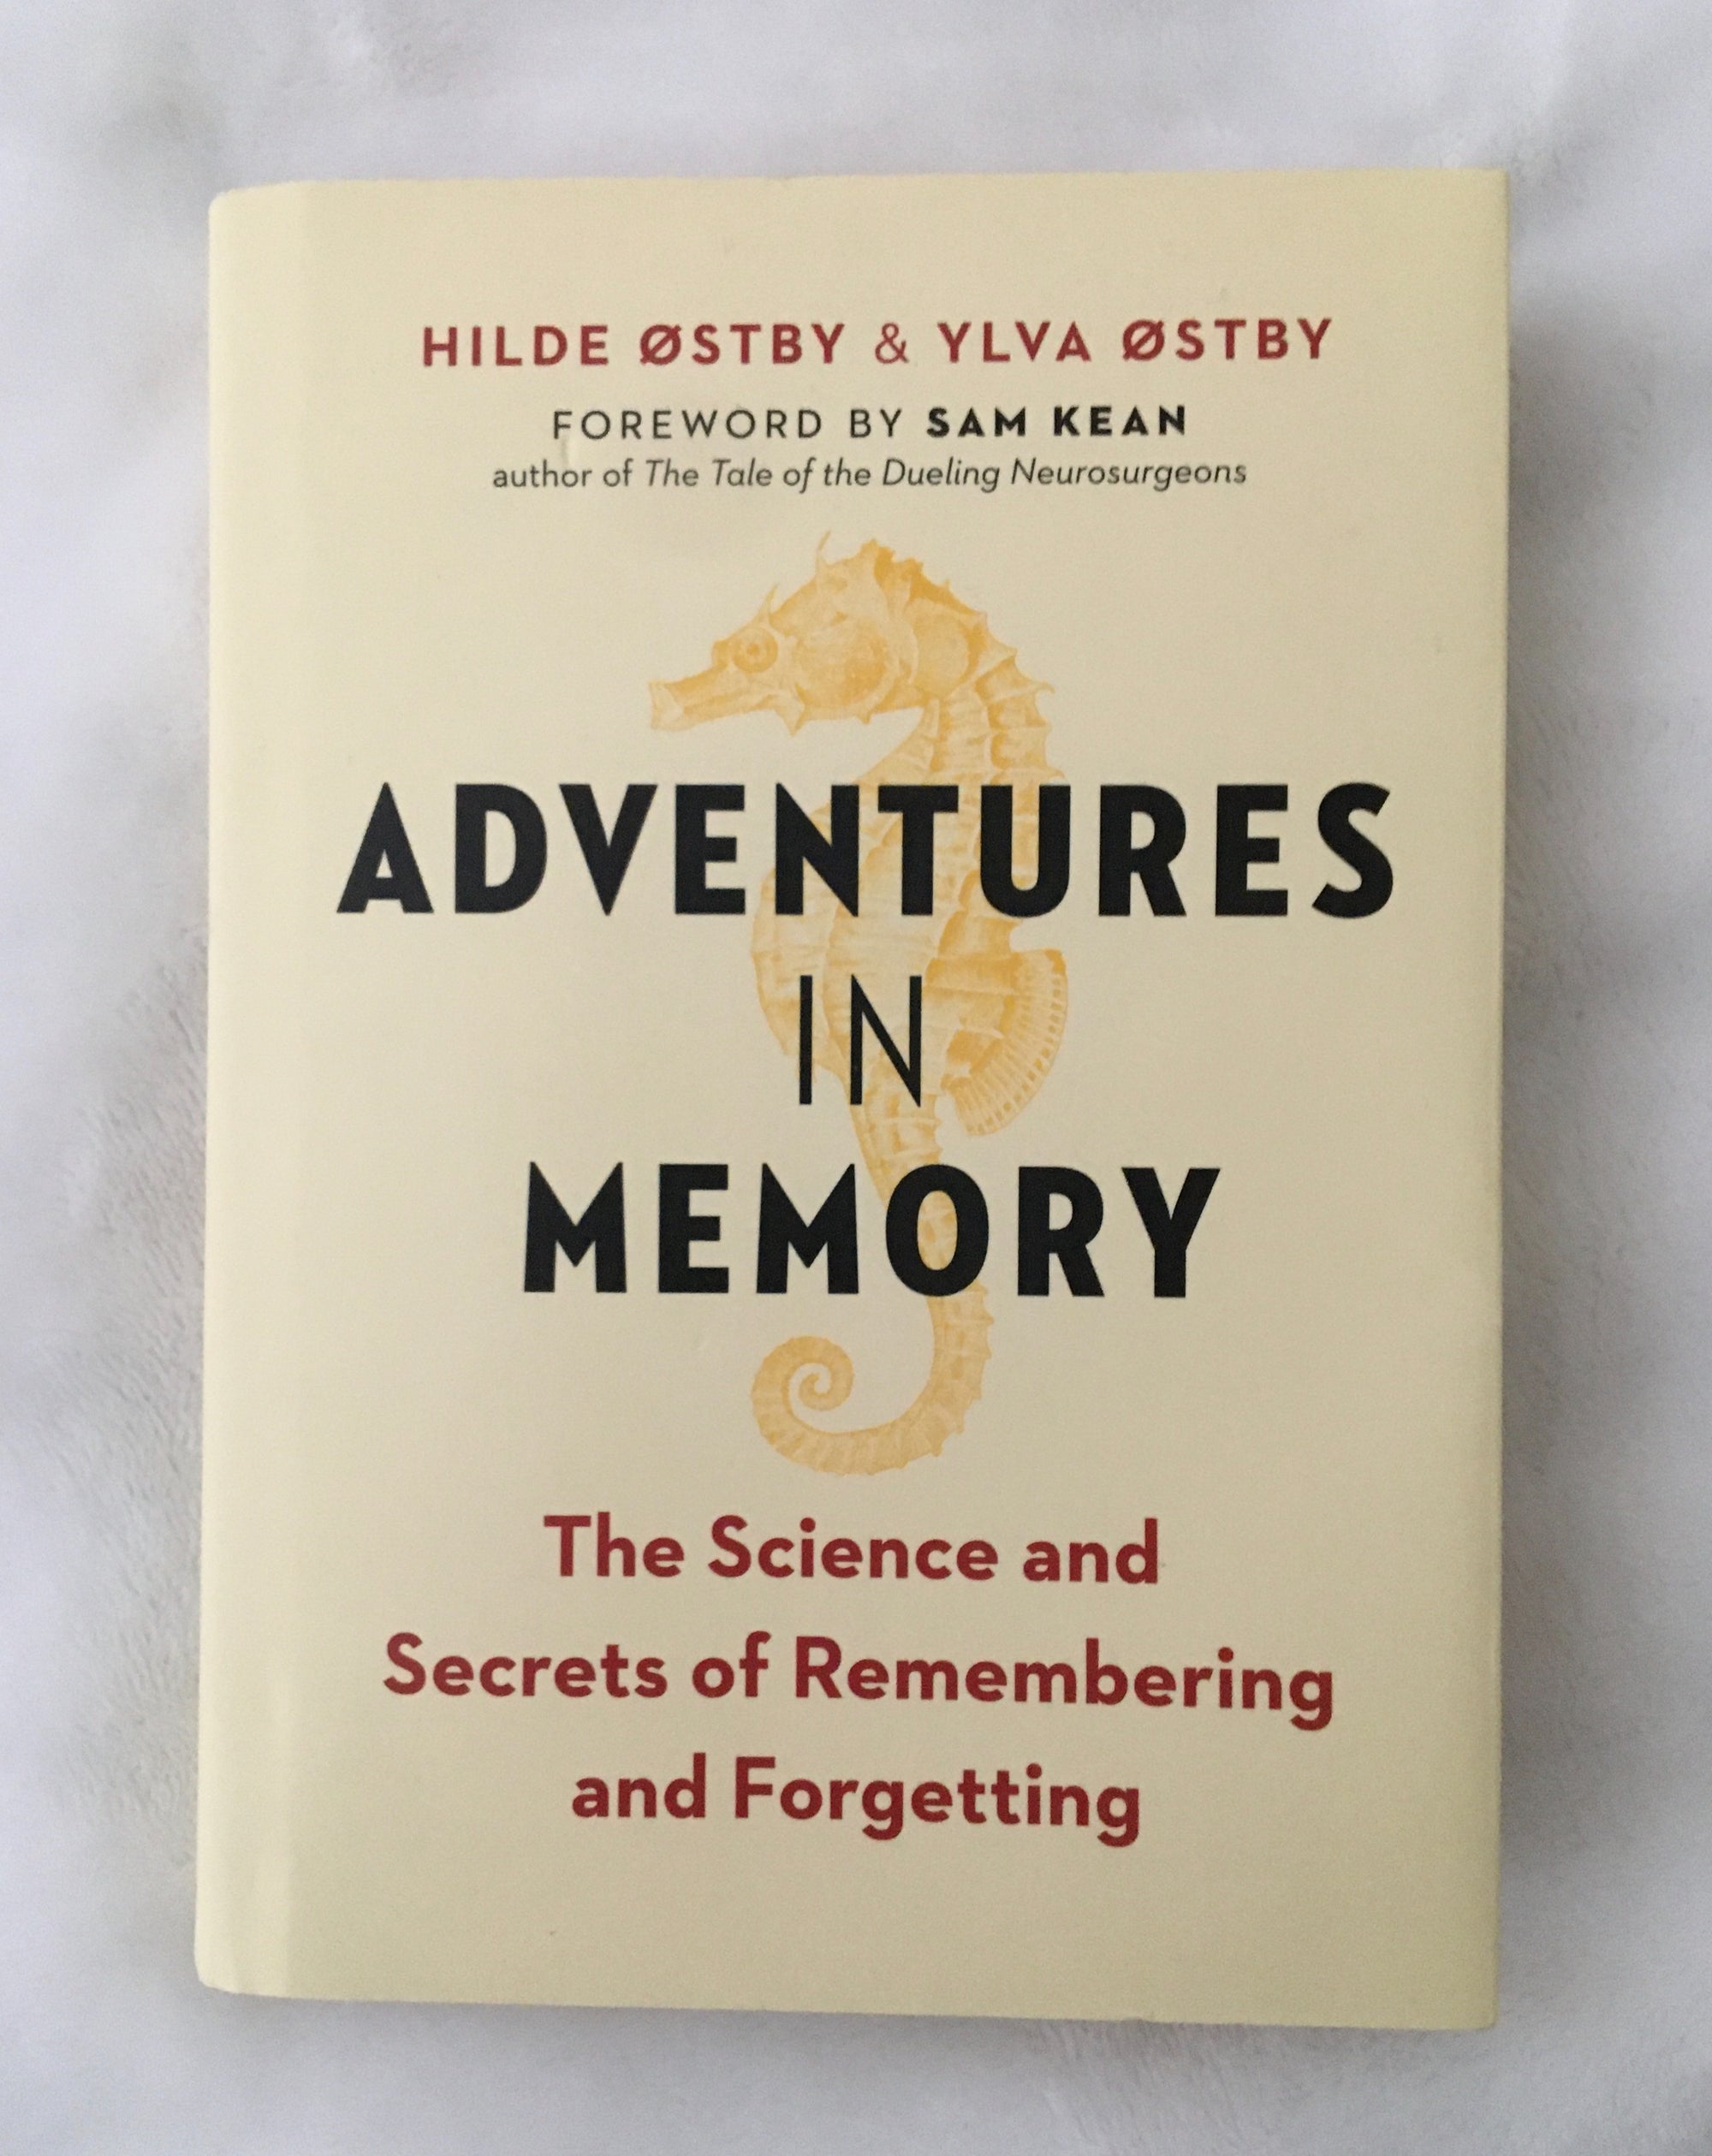 Adventures in Memory by (Hilde Ostby & Yluva Ostby, book, Ten Dollar Books, Ten Dollar Books